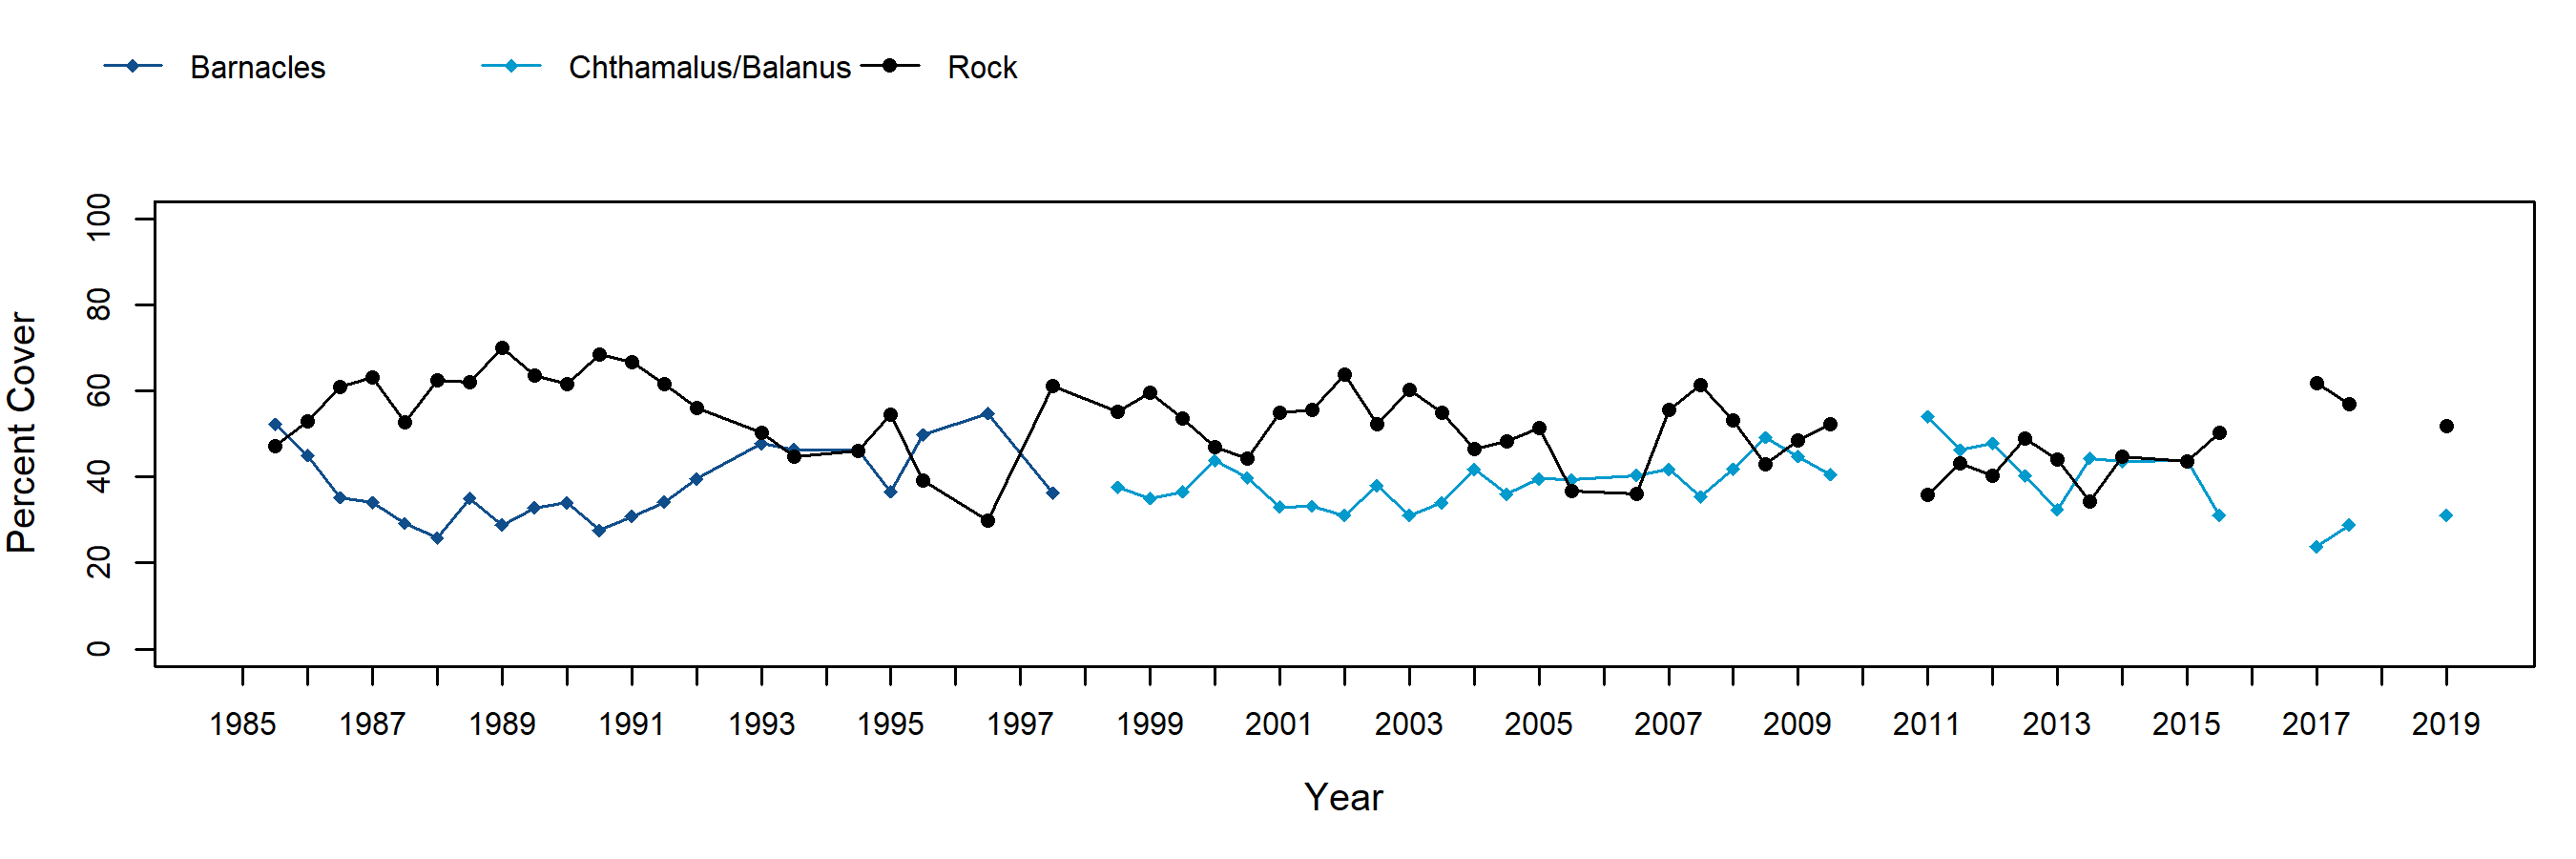 Johnsons Lee barnacle trend plot